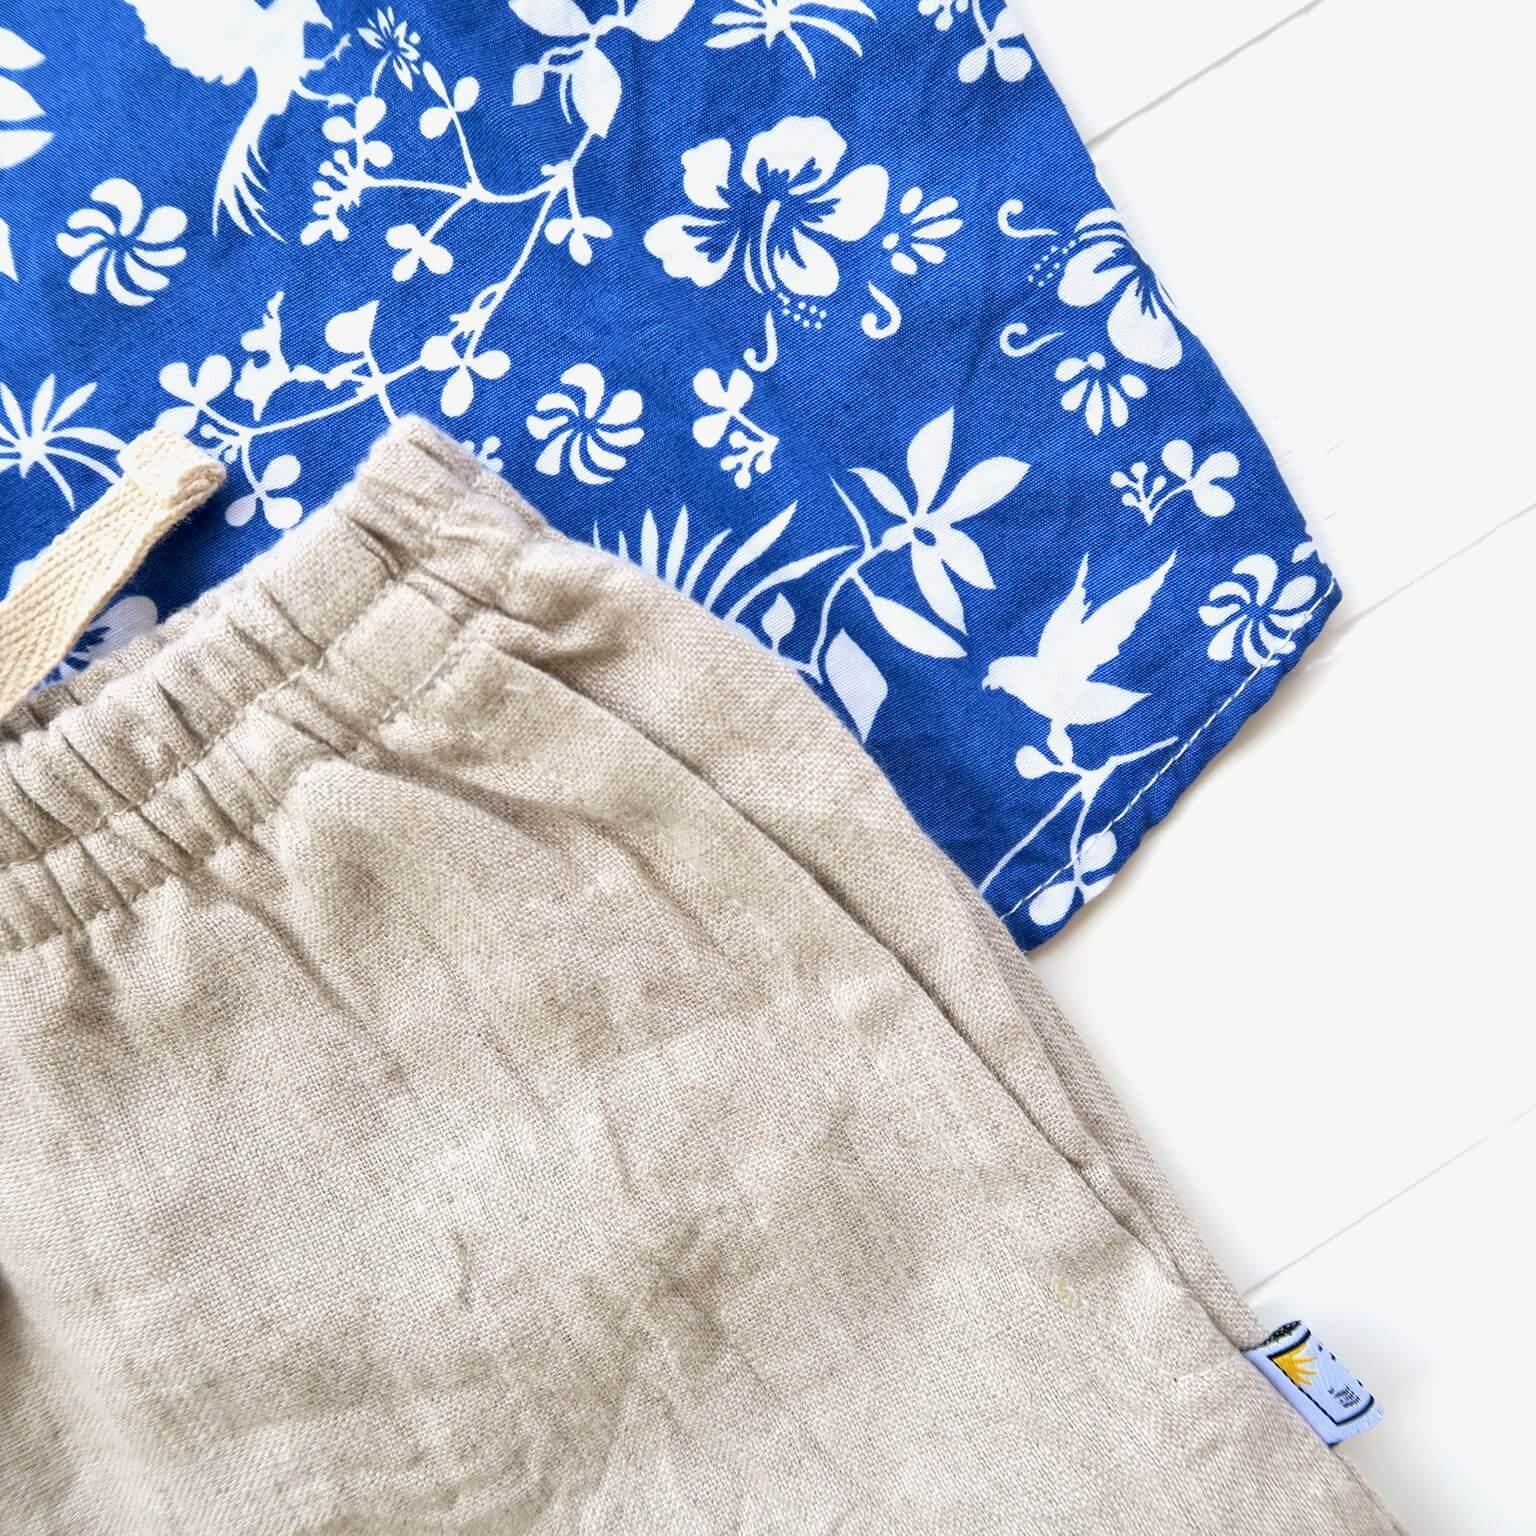 Cedar Top & Shorts in Blue Bird Garden and Brown Linen - Lil' Tati